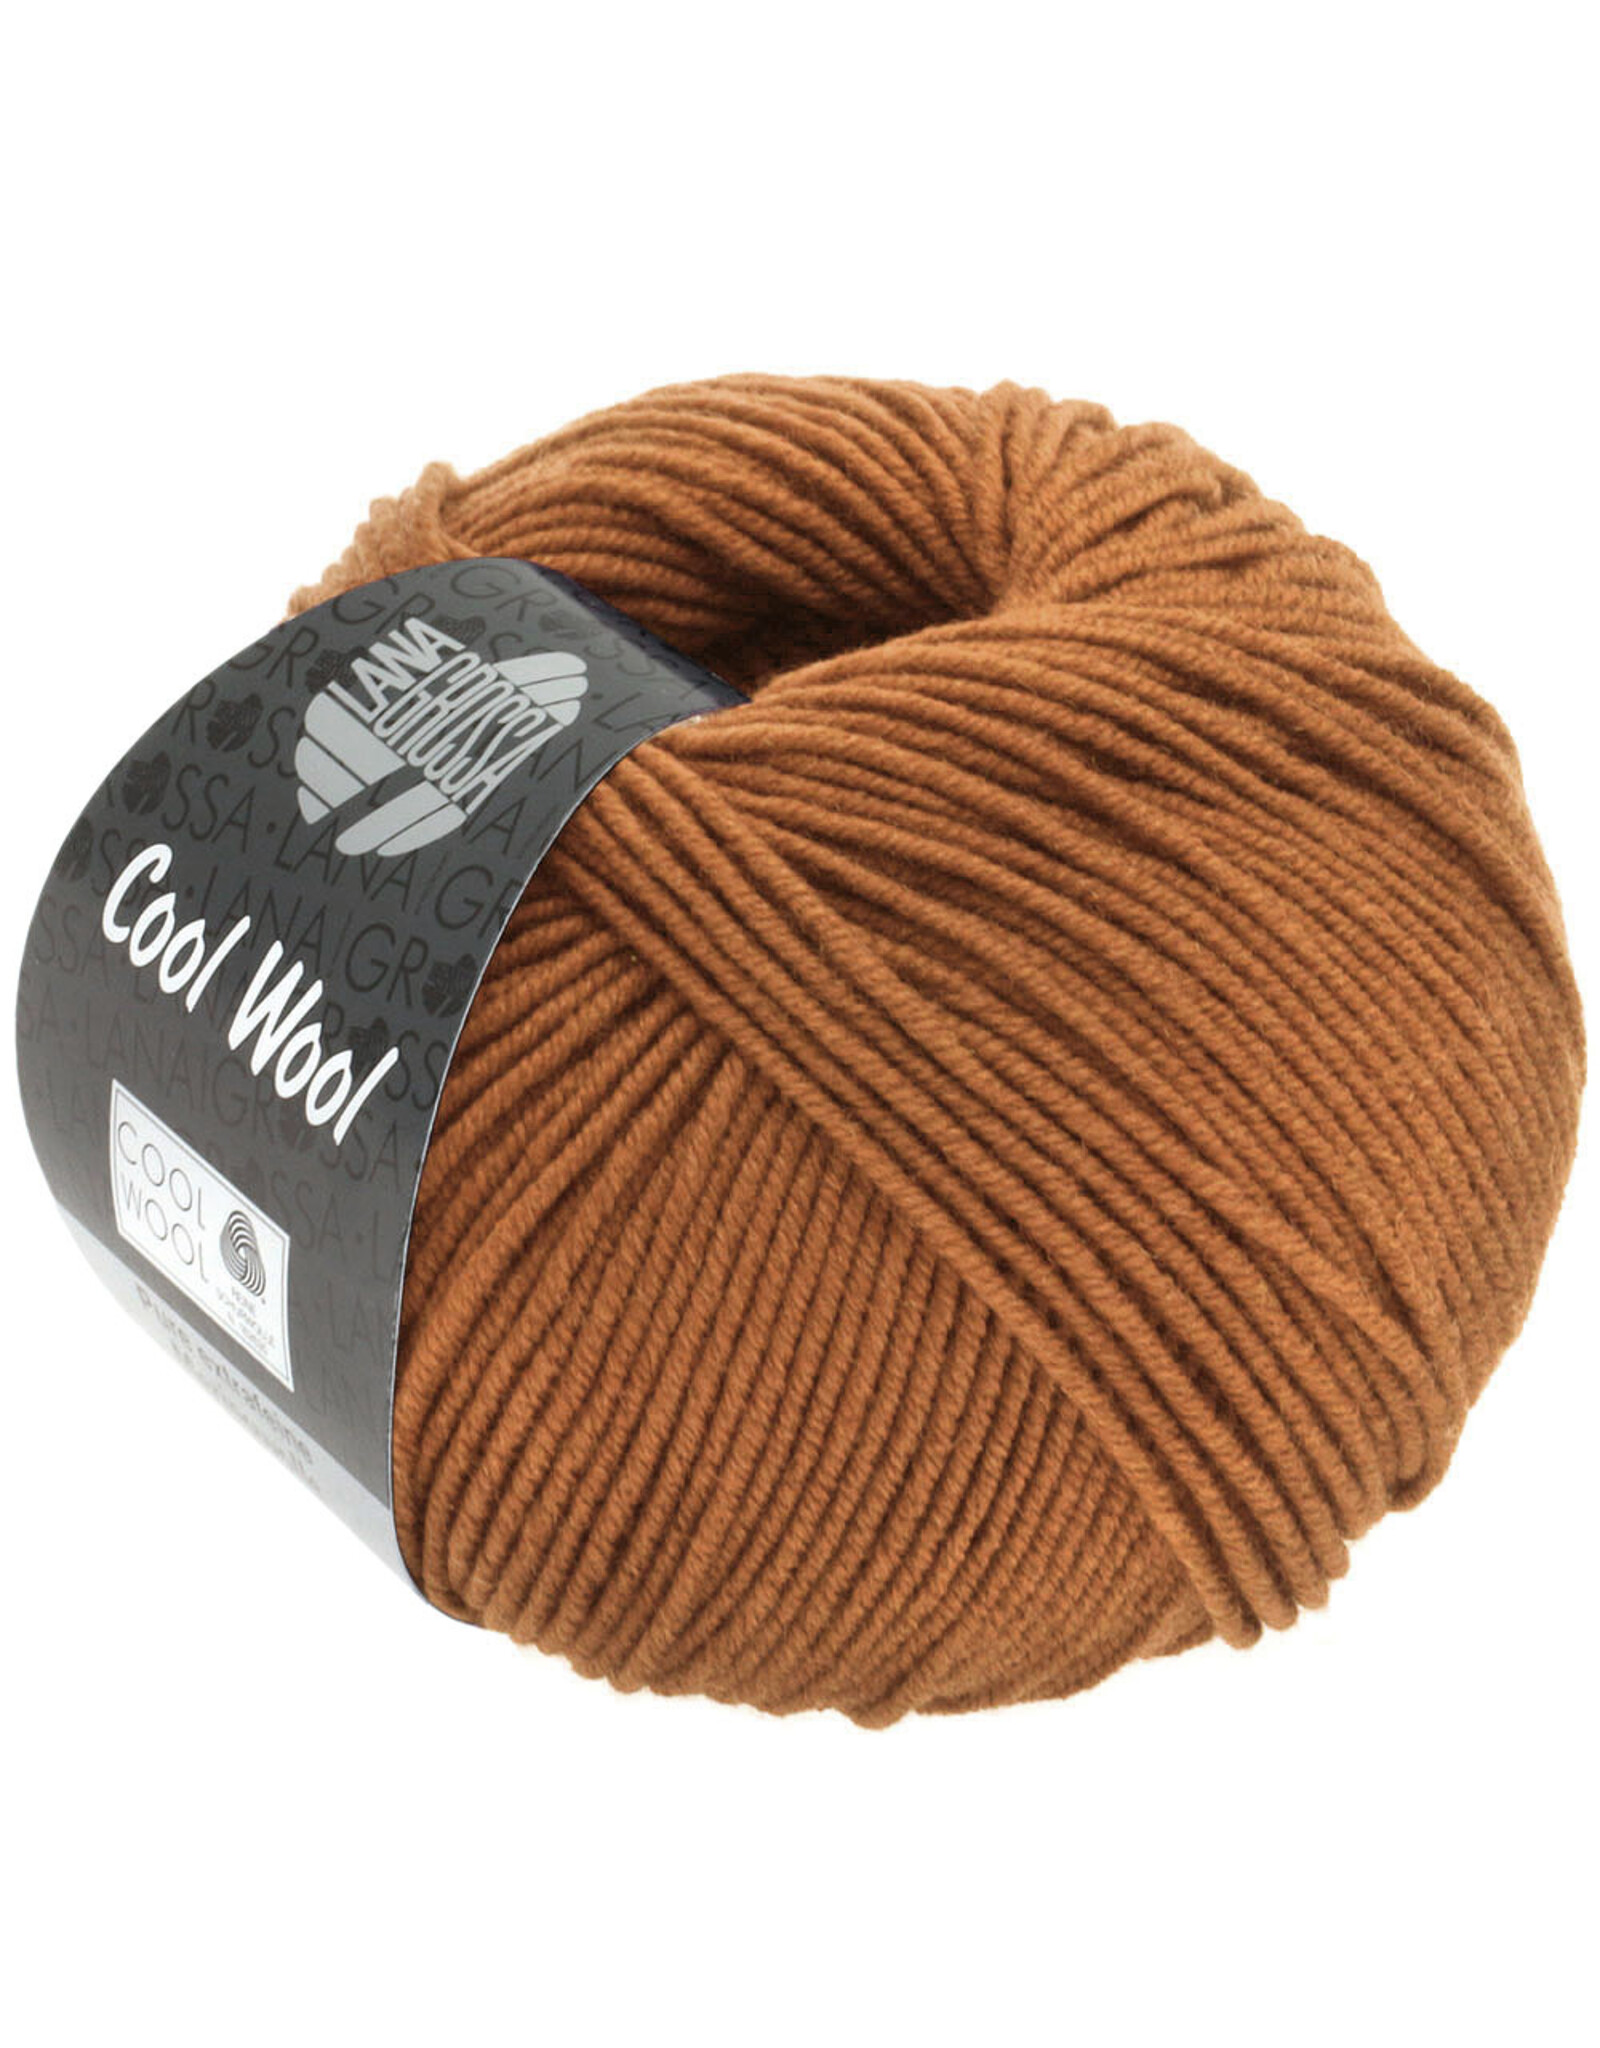 Lana Grossa Lana Grossa Cool wool 2054